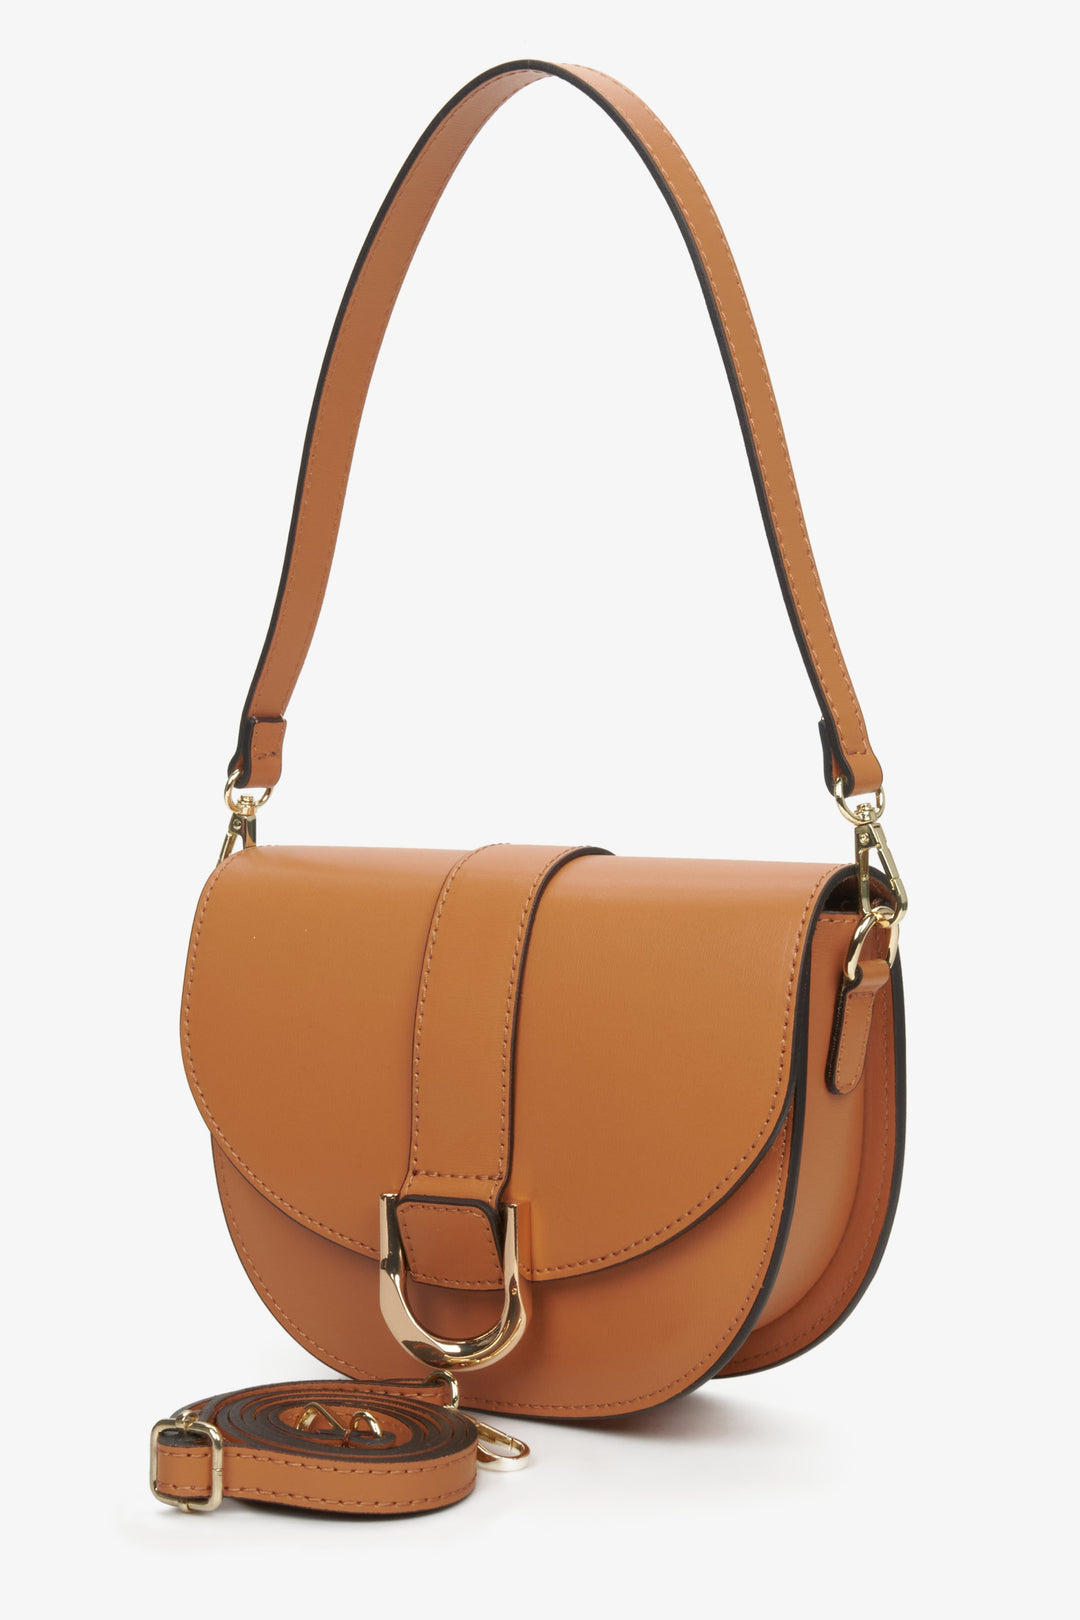 Leather, brown Estro women's handbag in the shape of a horseshoe.